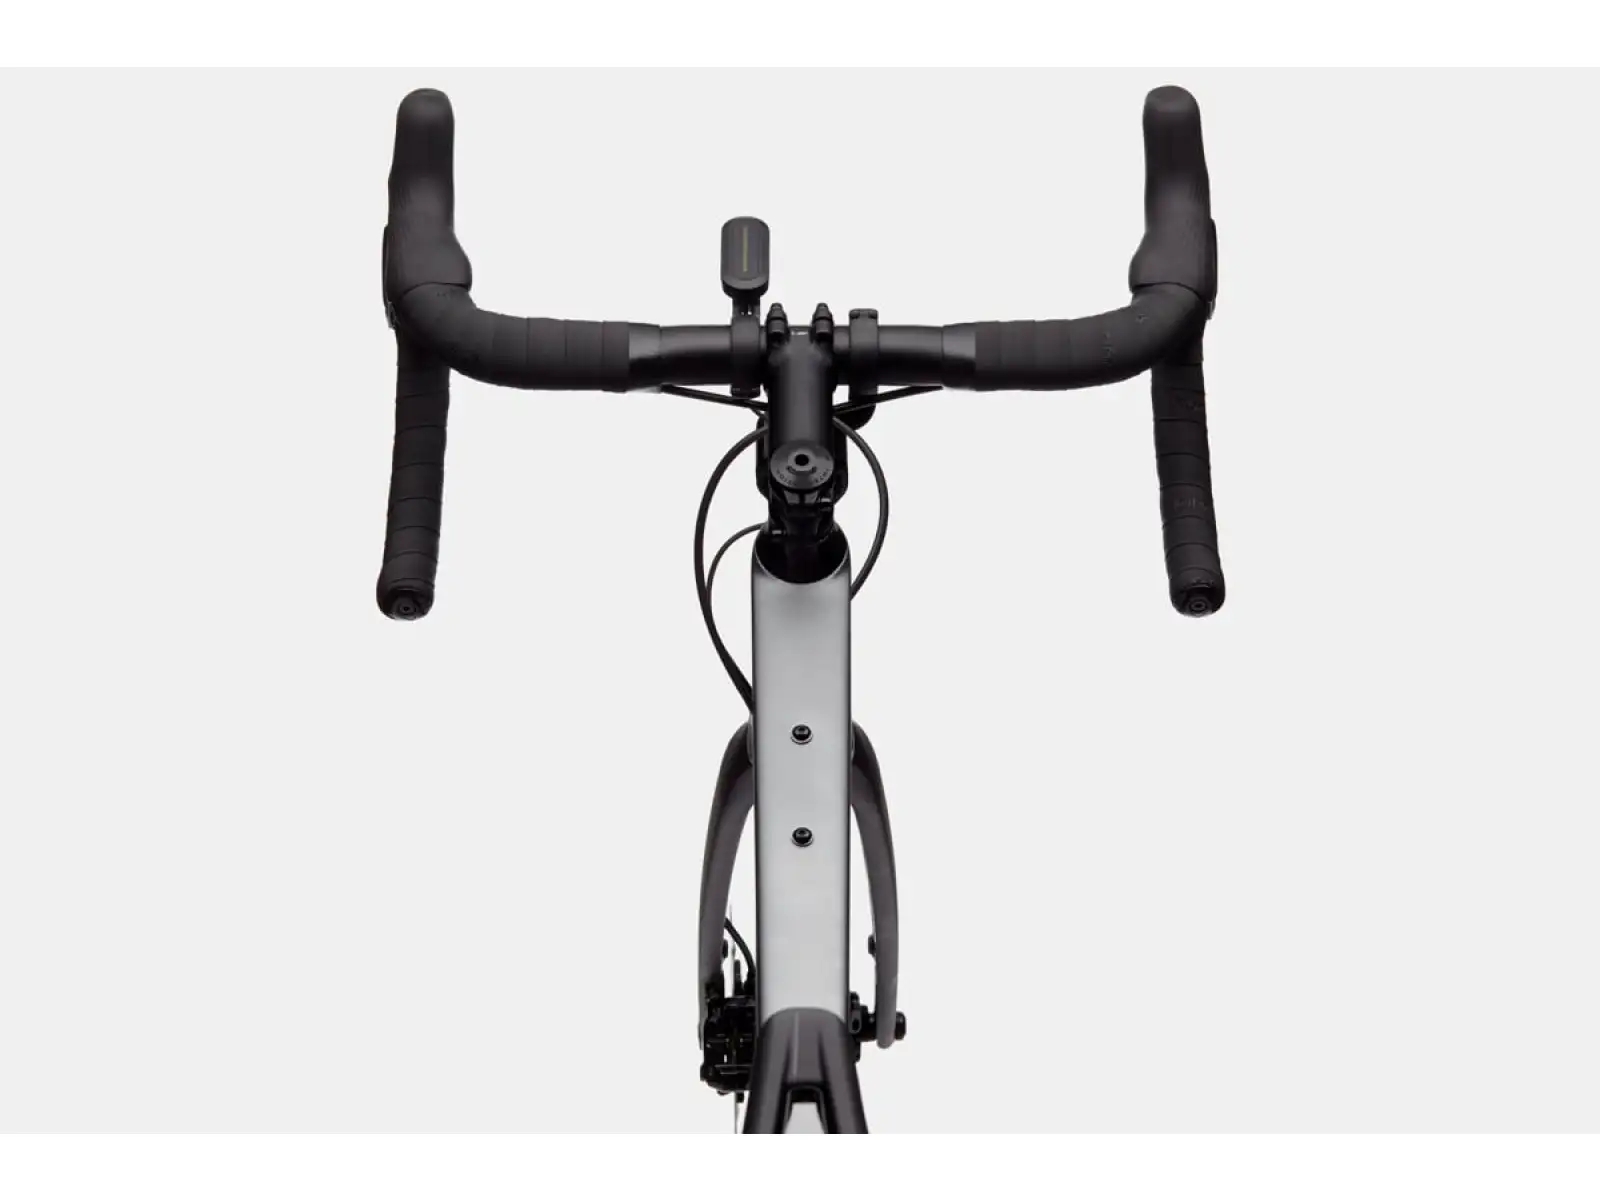 Cannondale Synapse Carbon 2 RLE GRY cestný bicykel